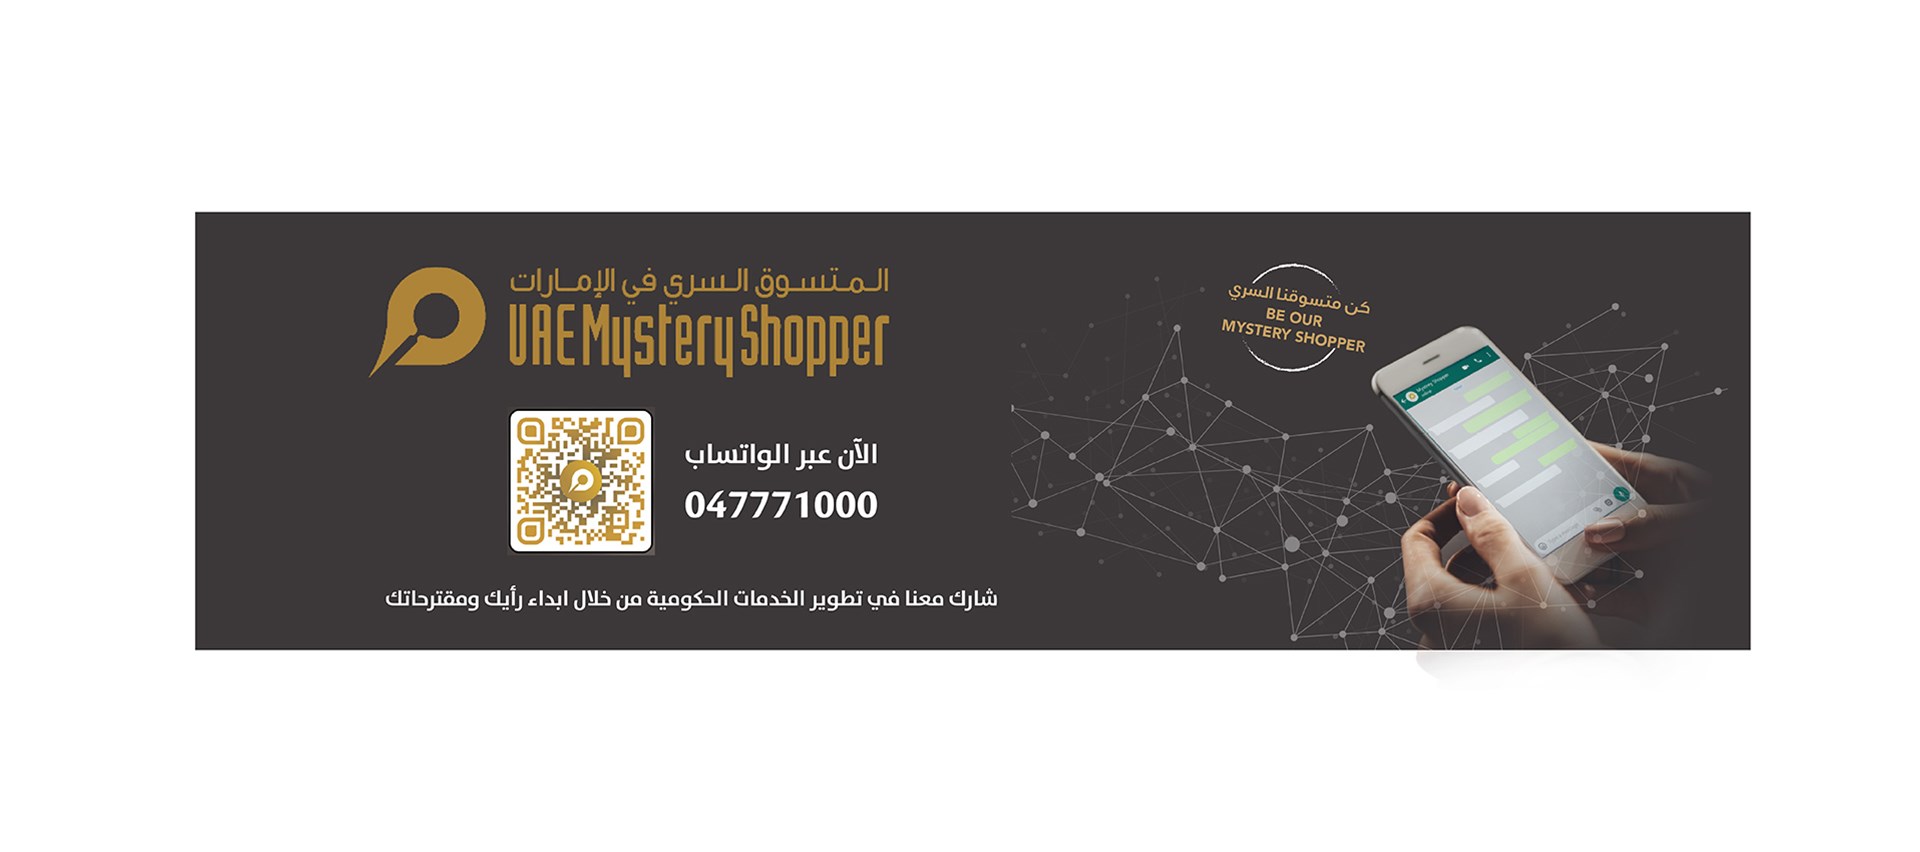 UAE-Mystery-Shopper-17.10.22.jpg